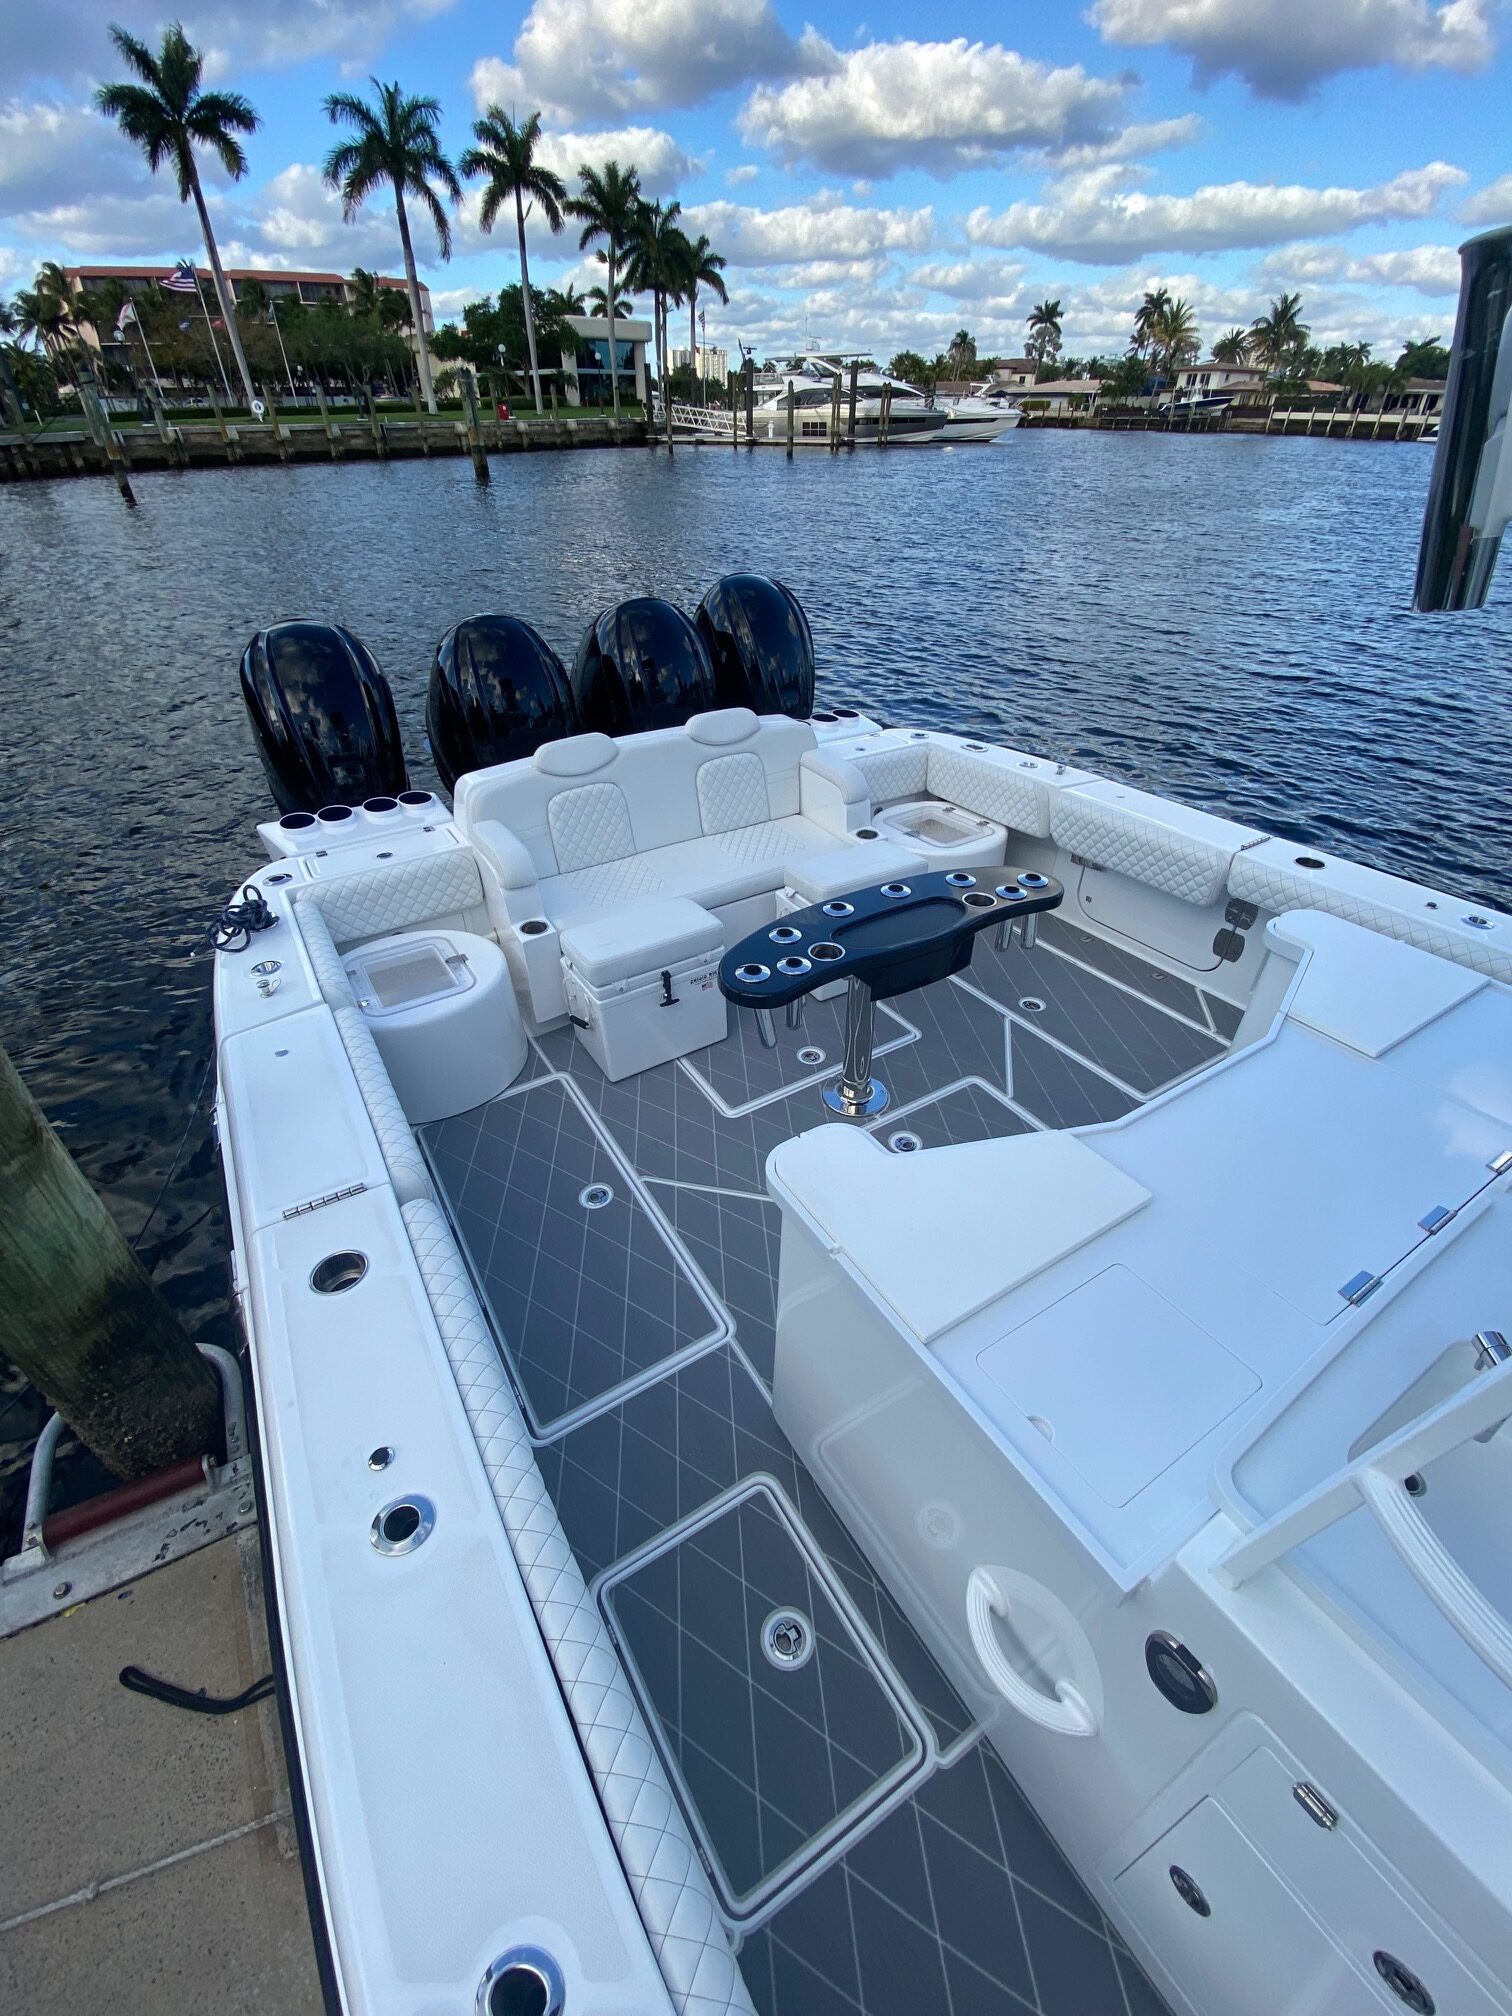 Hydrasports Custom Boat with SeaDek Flooring Installed